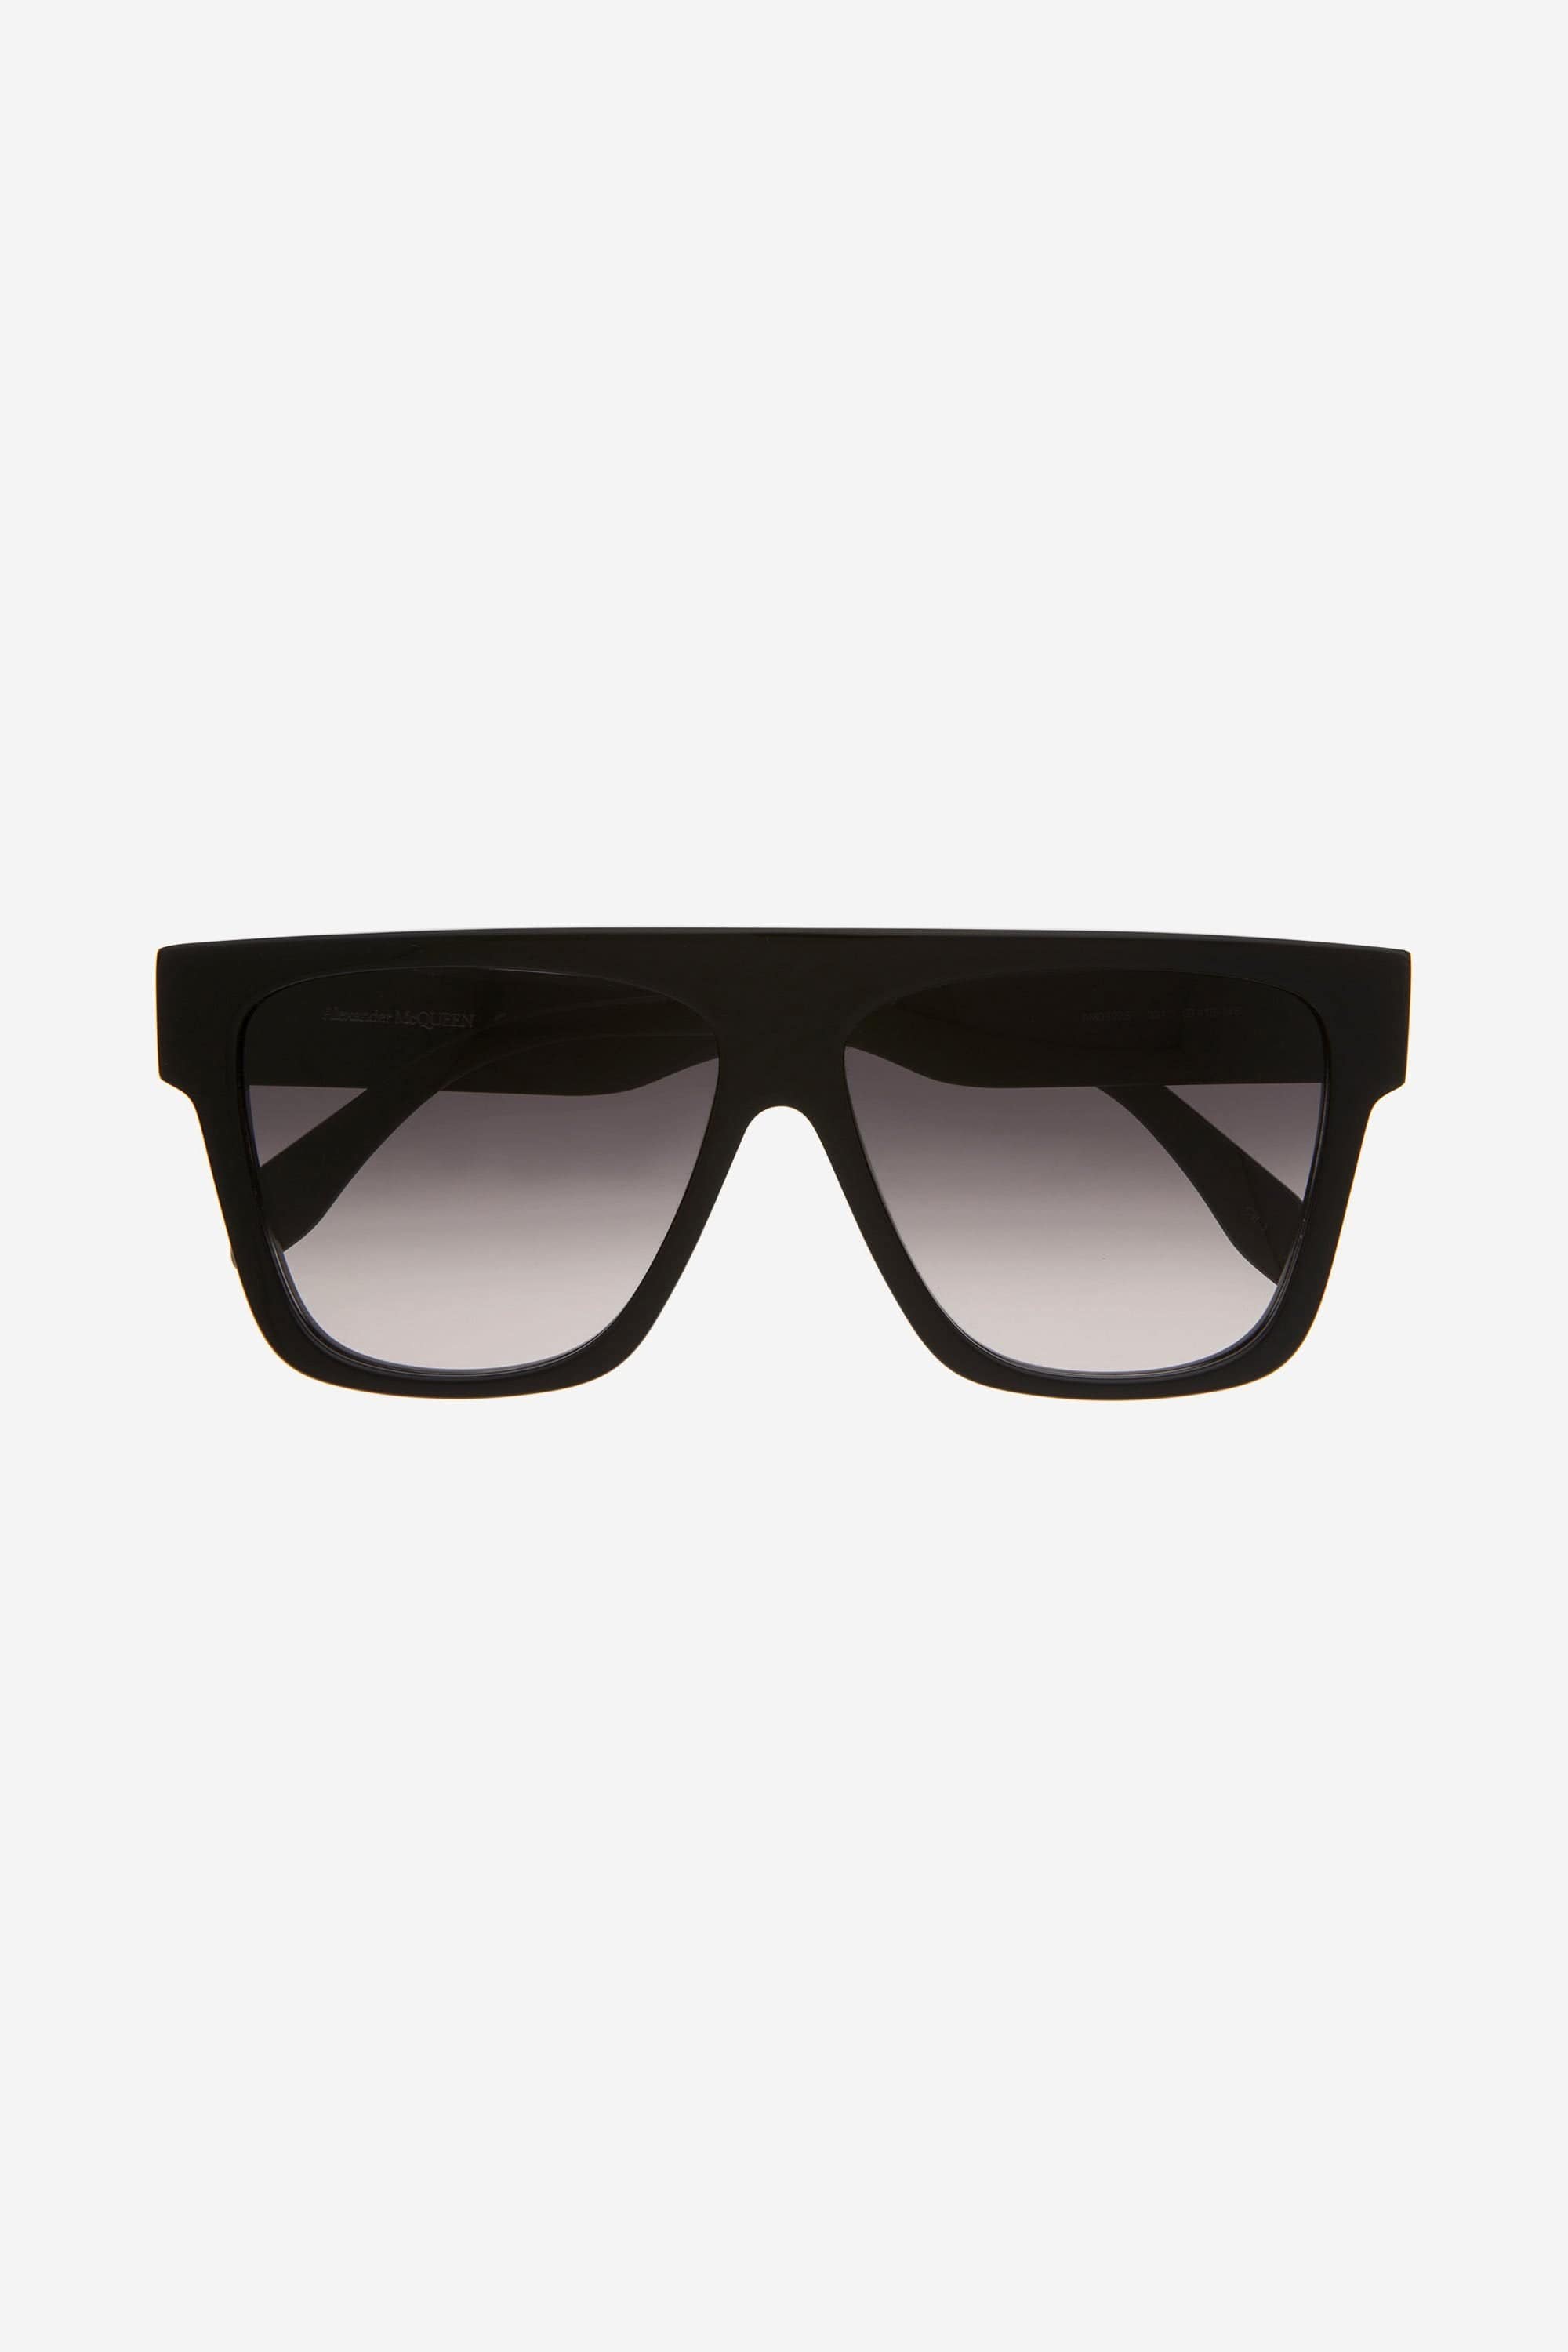 Alexander McQueen UNISEX squared flat-top acetate sunglasses - Eyewear Club